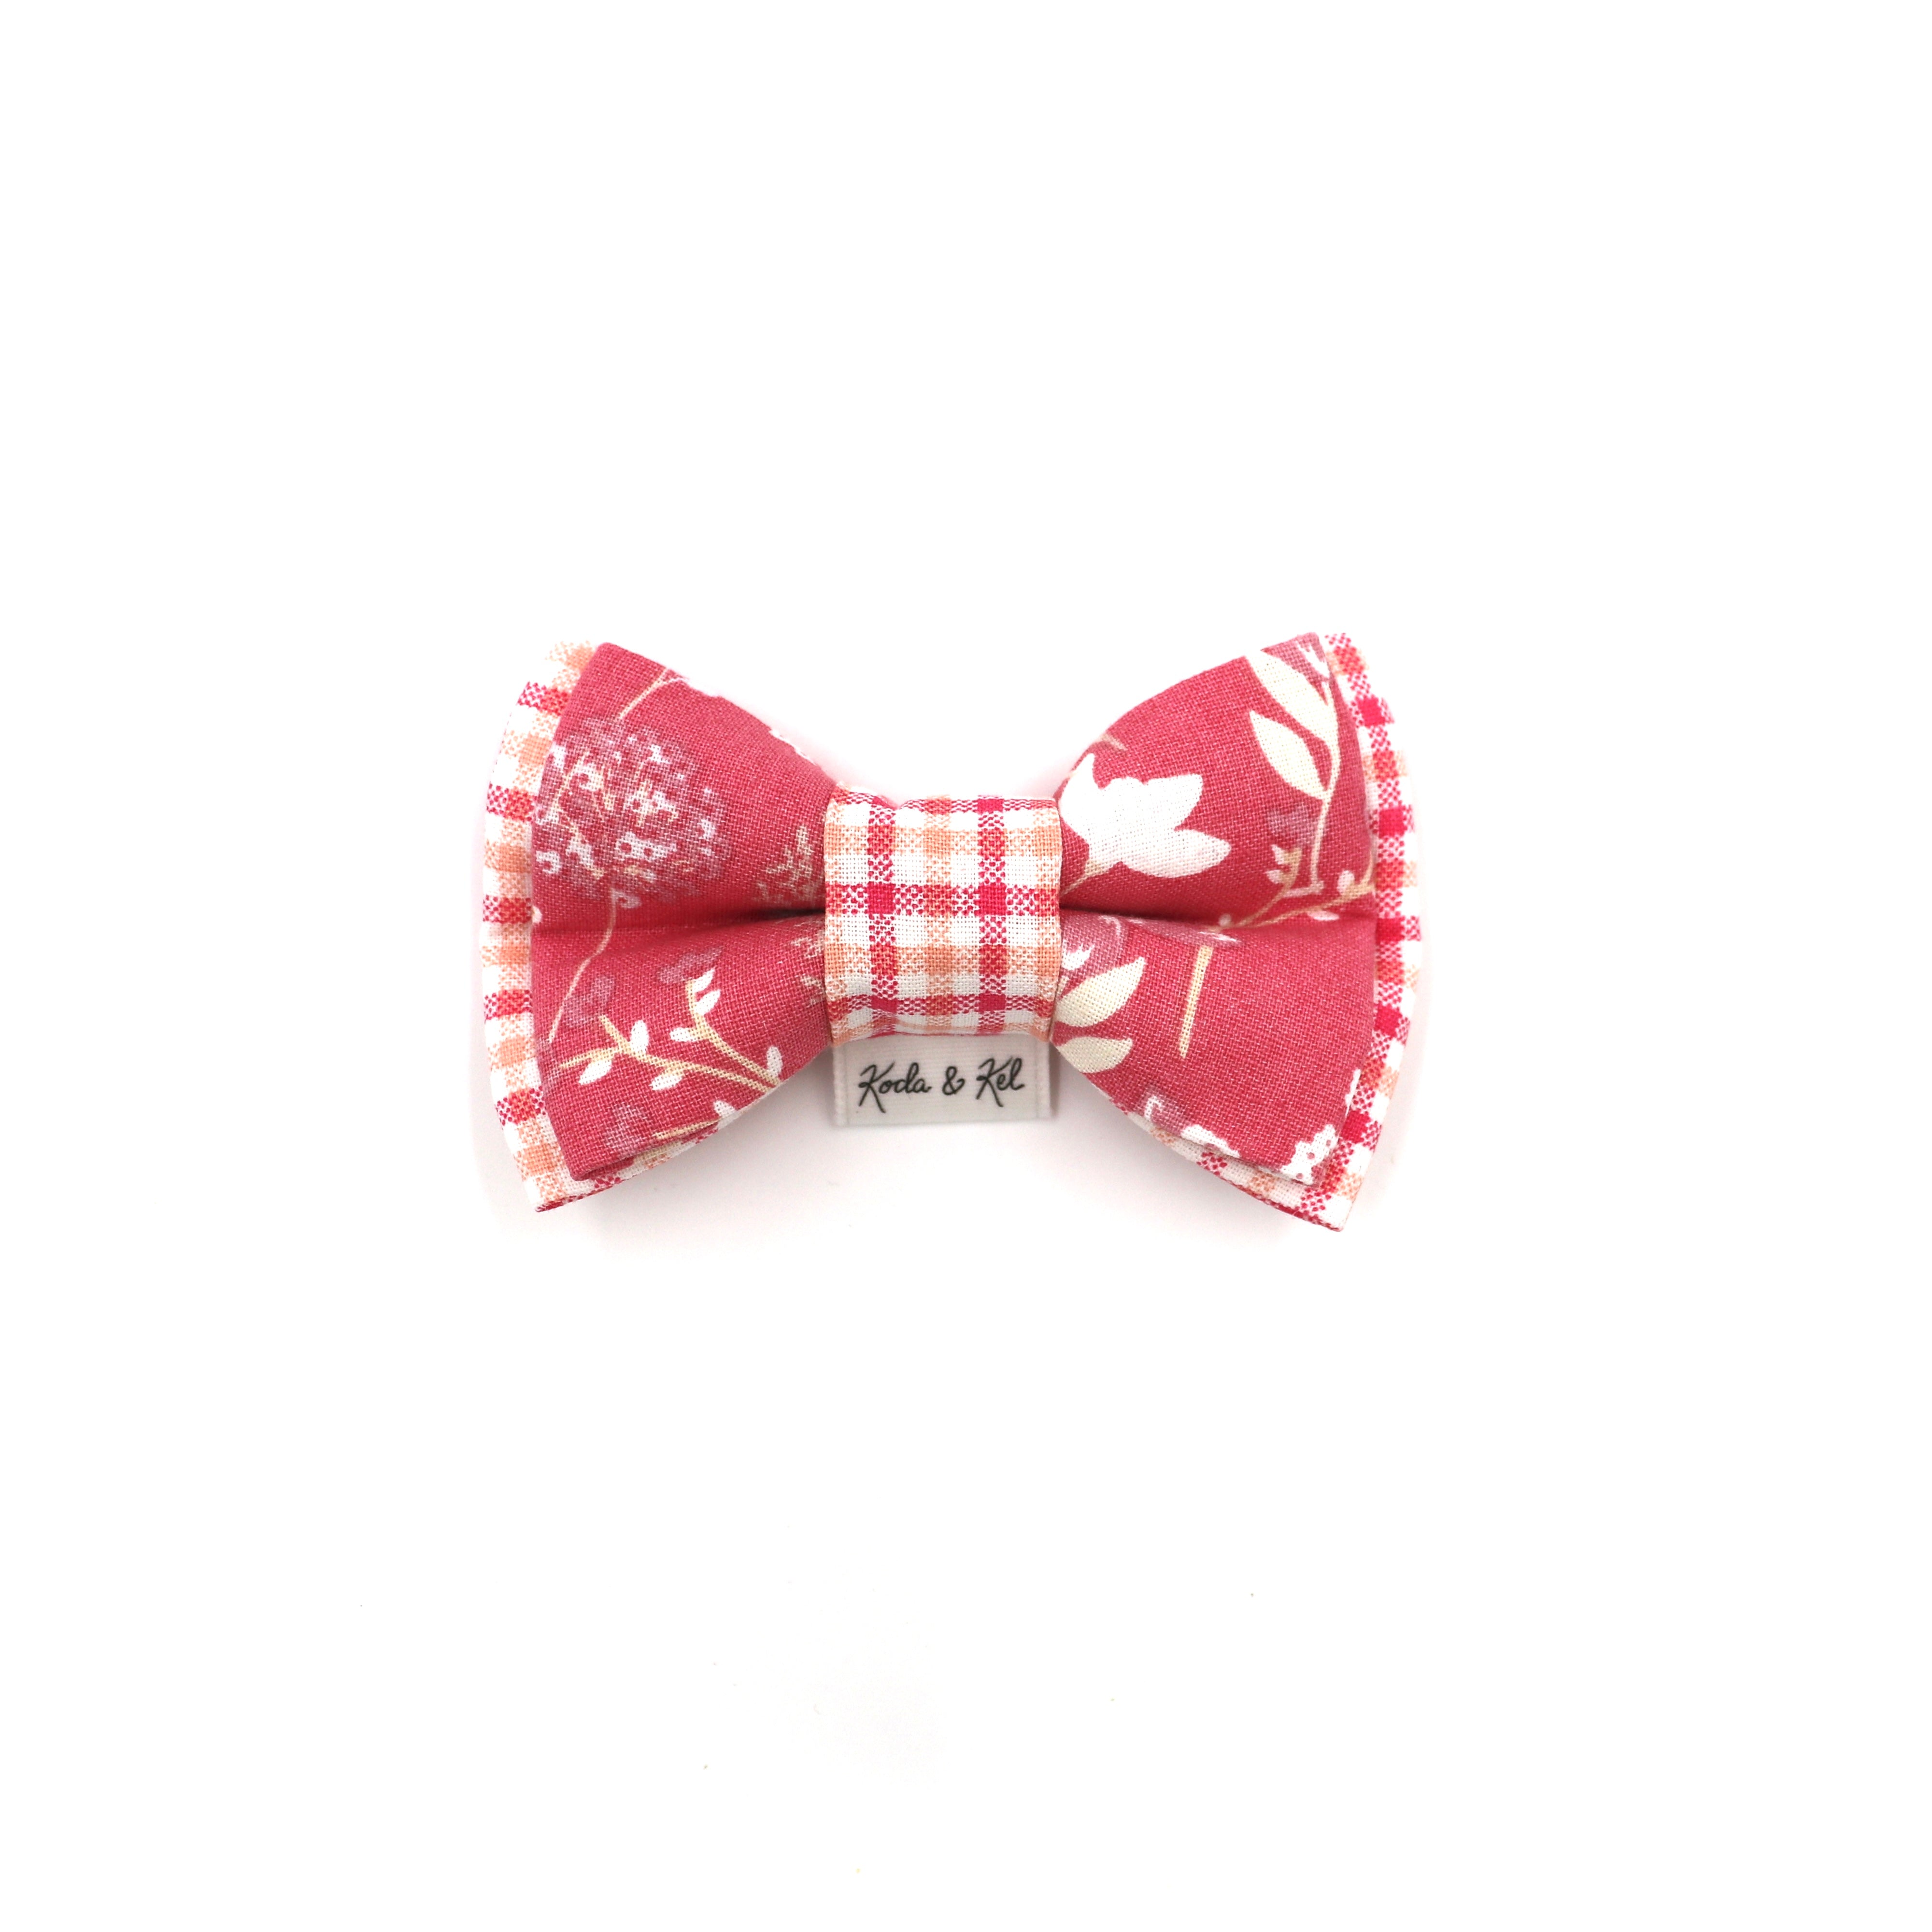 Wildflower Pink Bow Tie